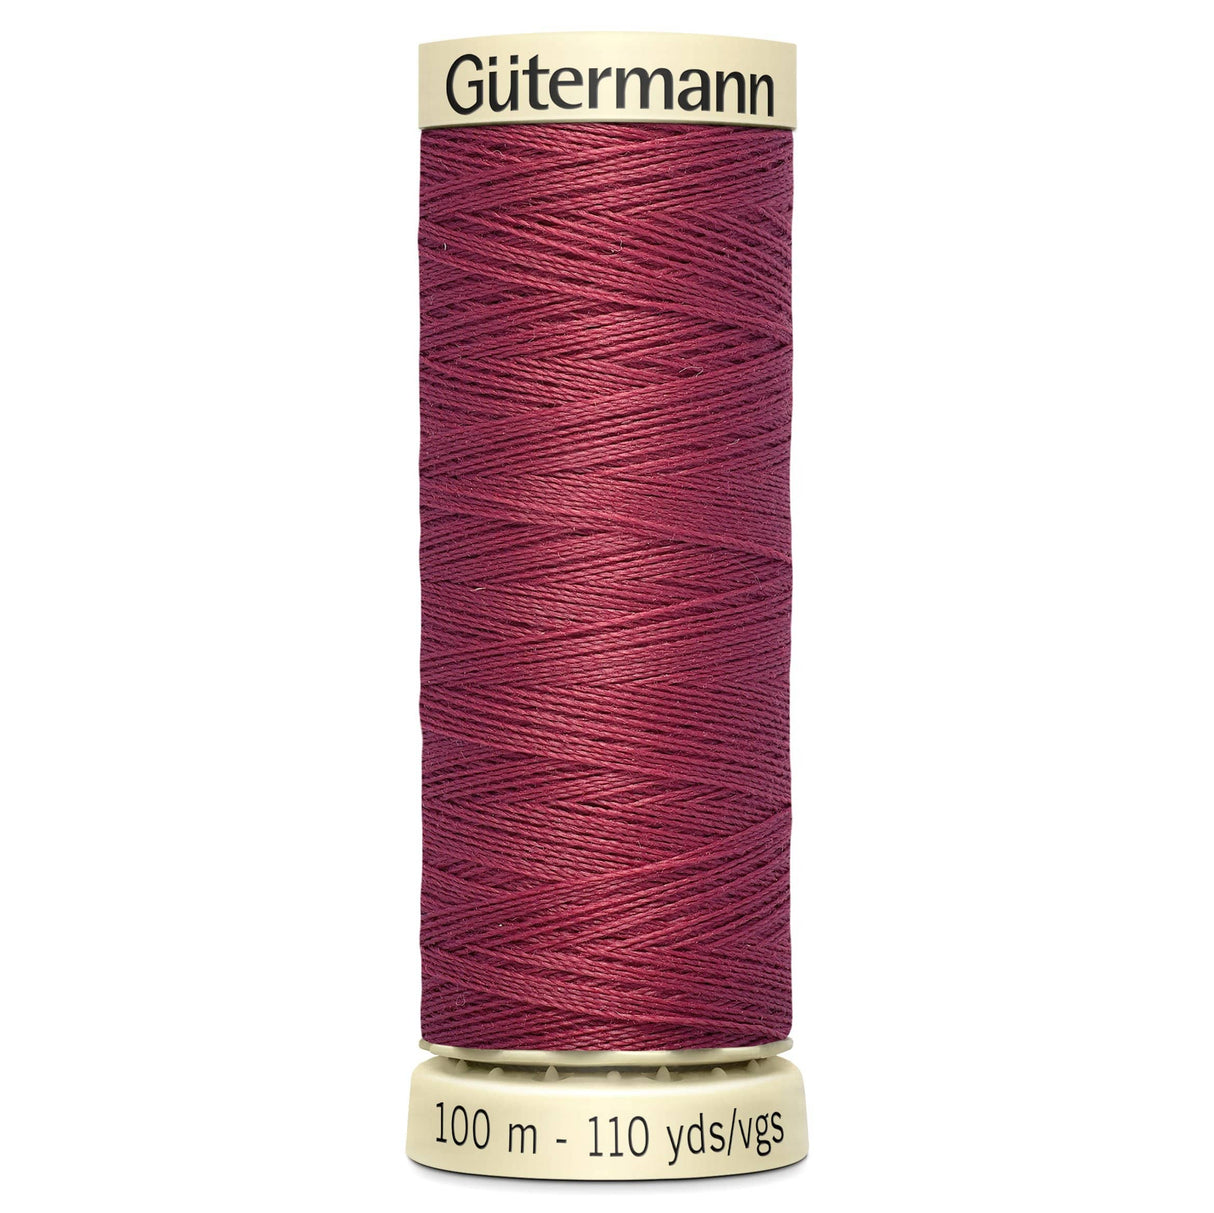 Groves Haberdashery 730 Gutermann Thread Sewing Cotton 100 m Black to Pink